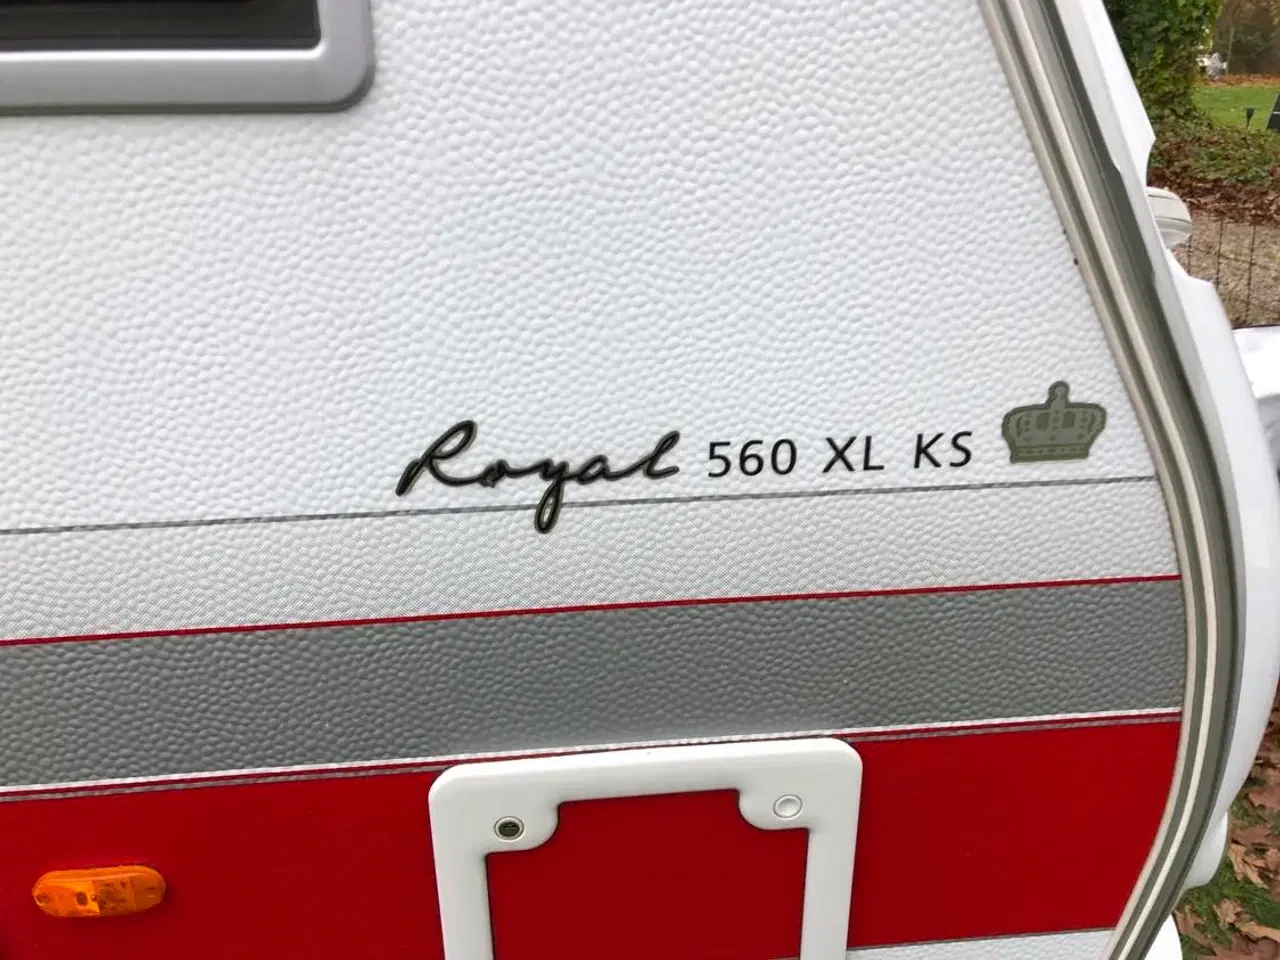 Billede 1 - Kabe Royal 560 XL KS